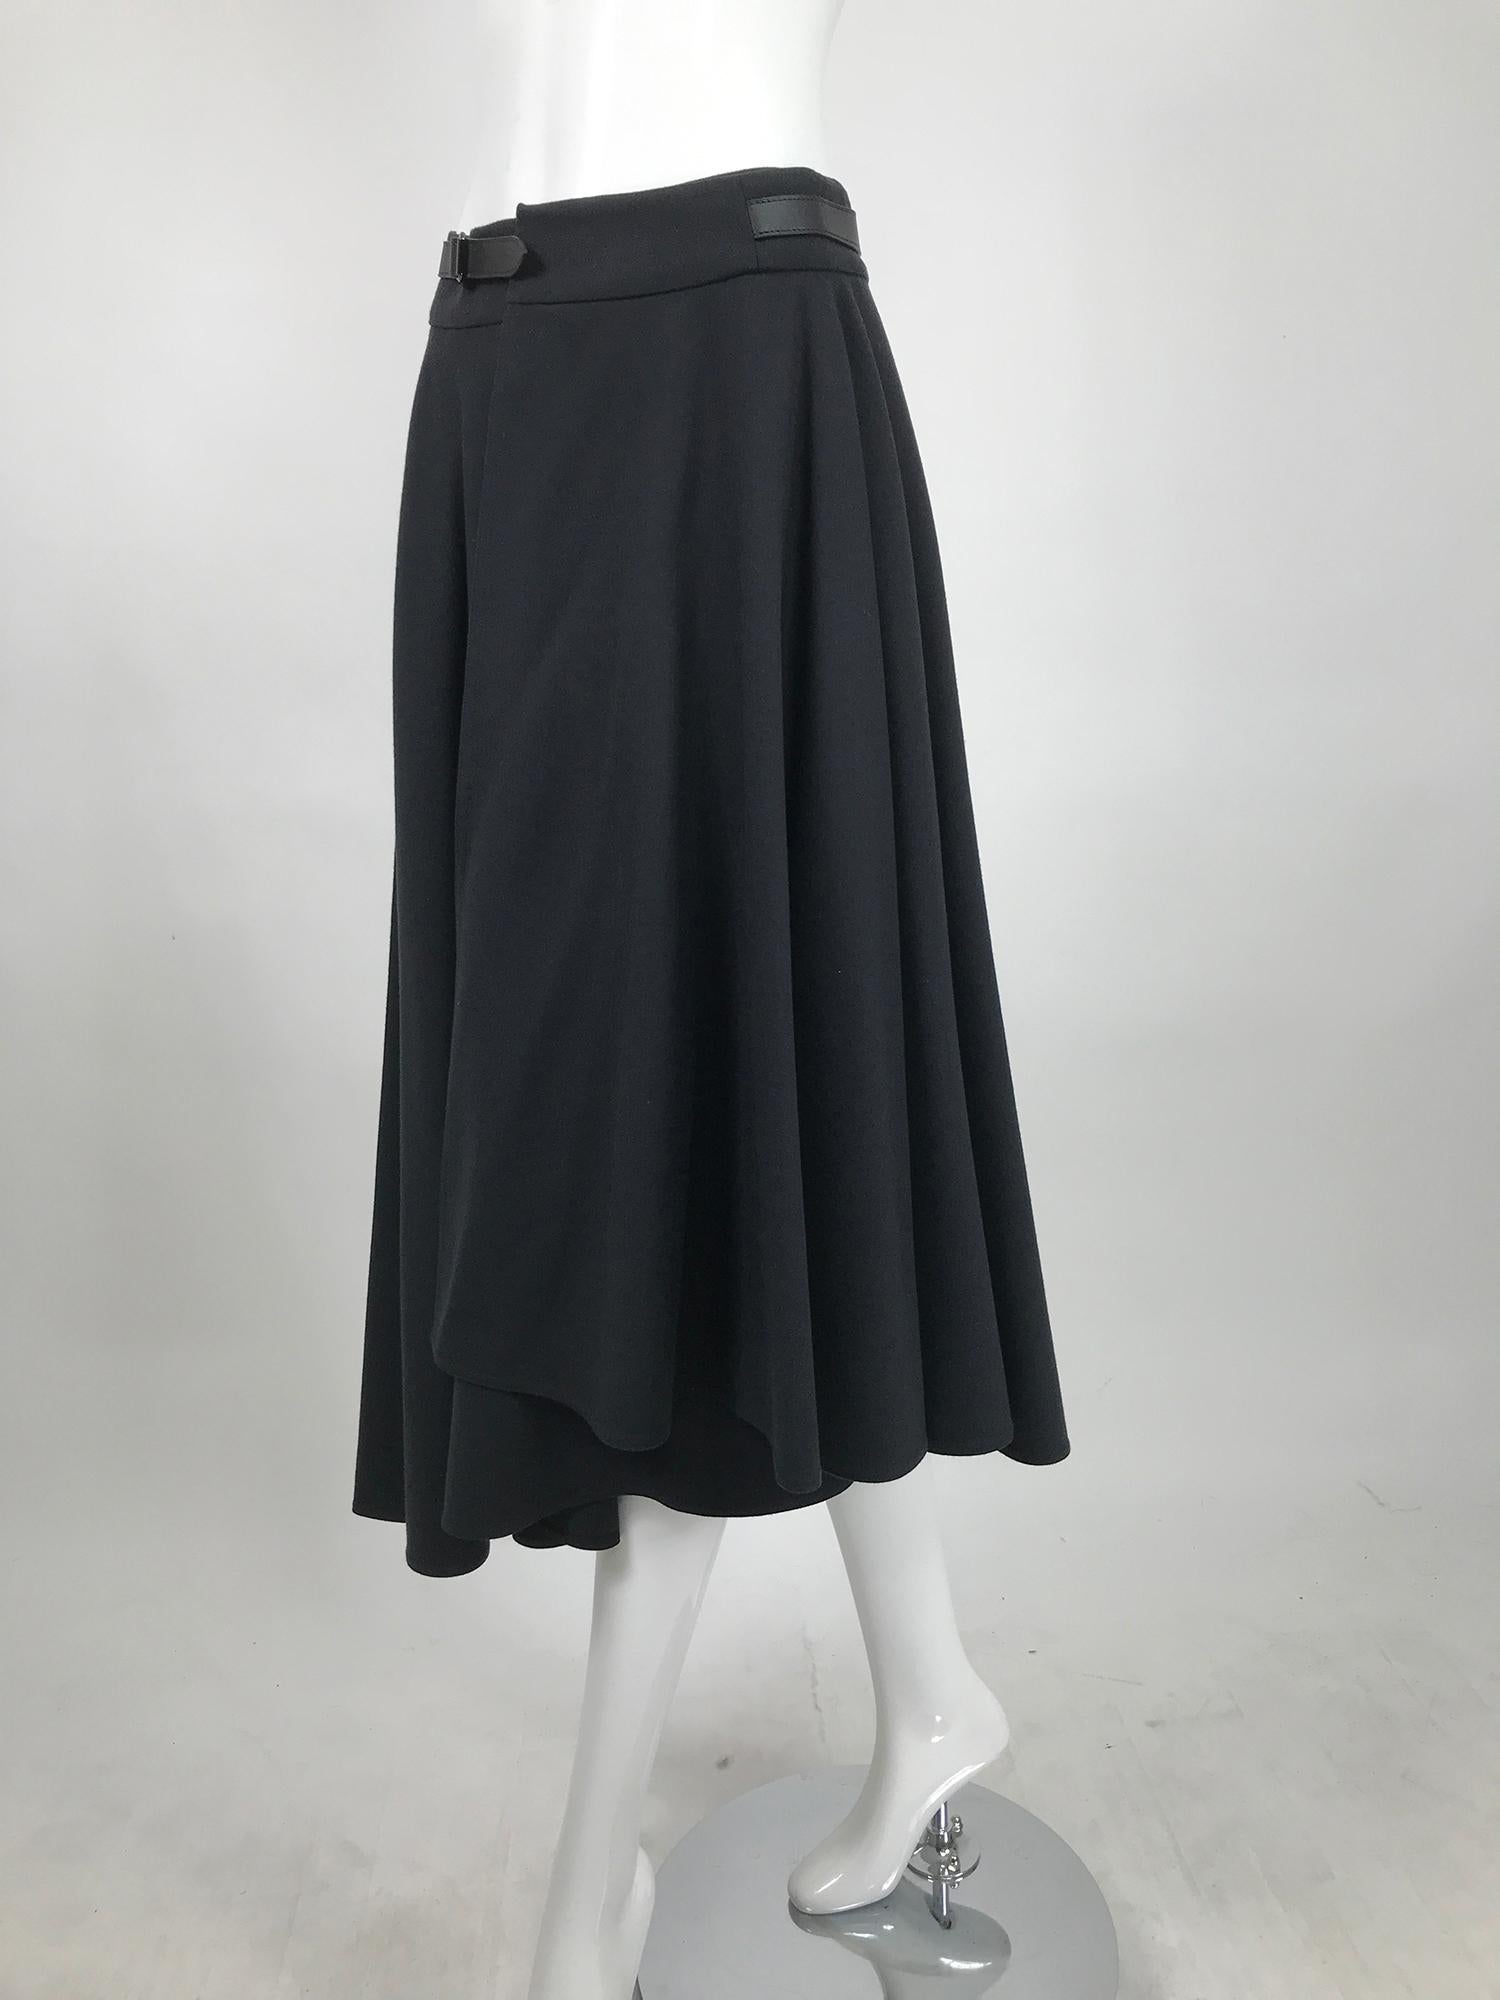 Hermès Asymmetrical Black Wool Full Circle Wrap Skirt with Leather Belt 3